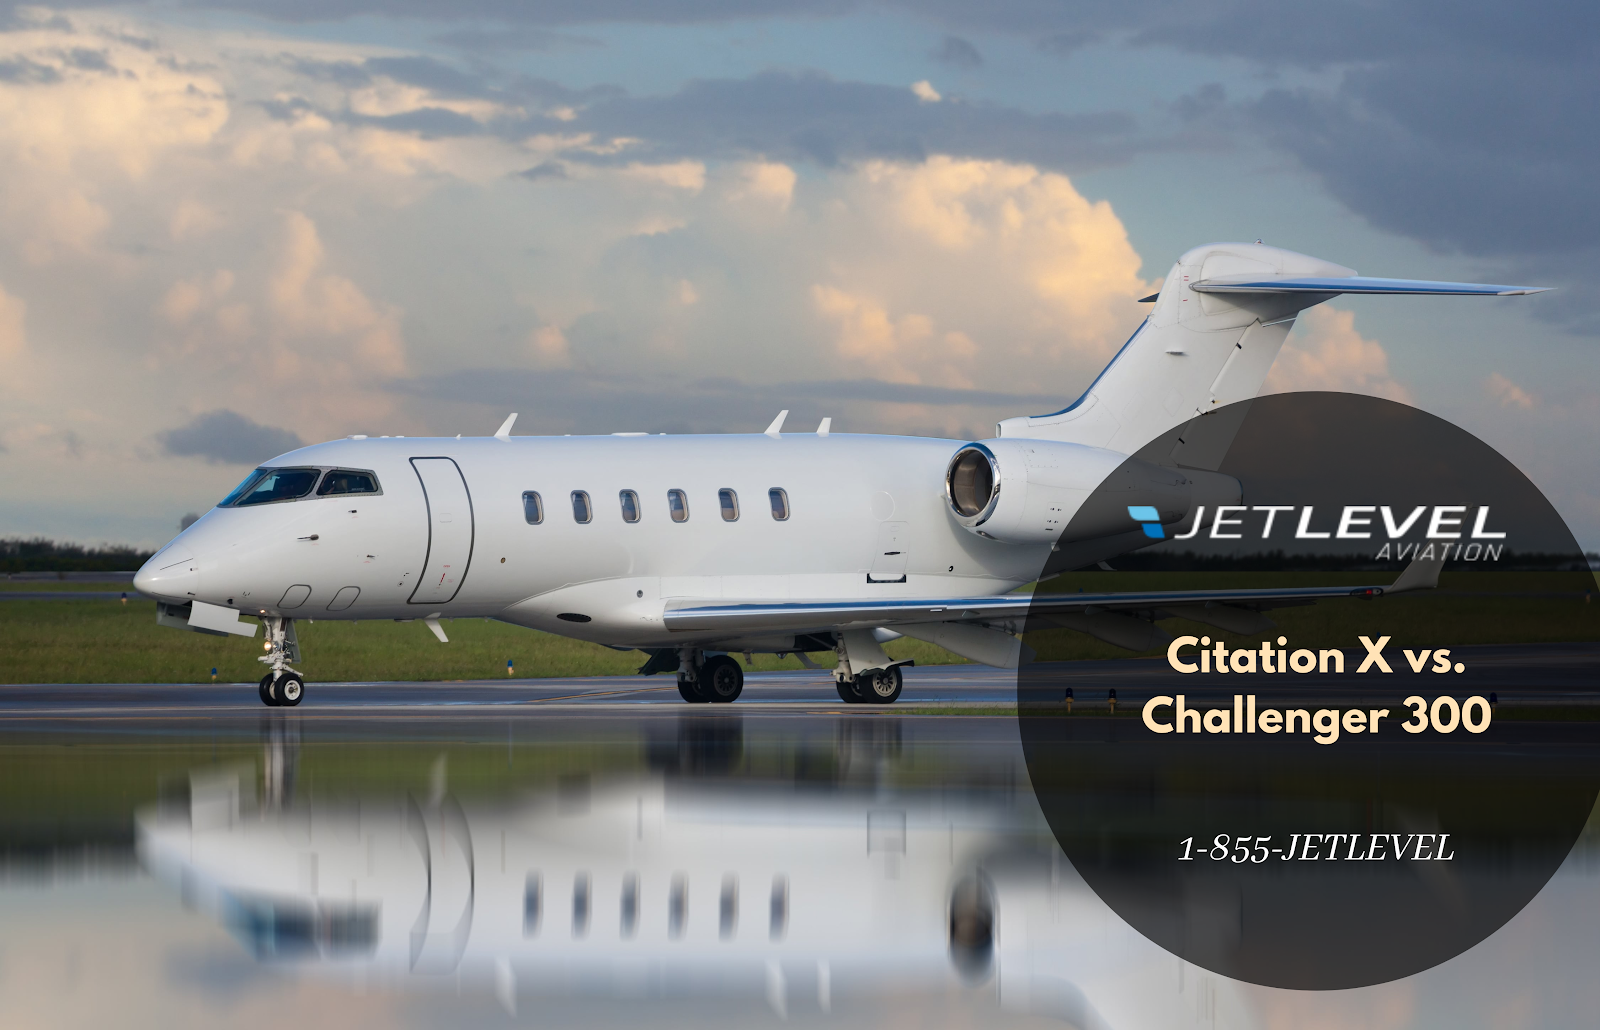 Citation X vs Challenger 300